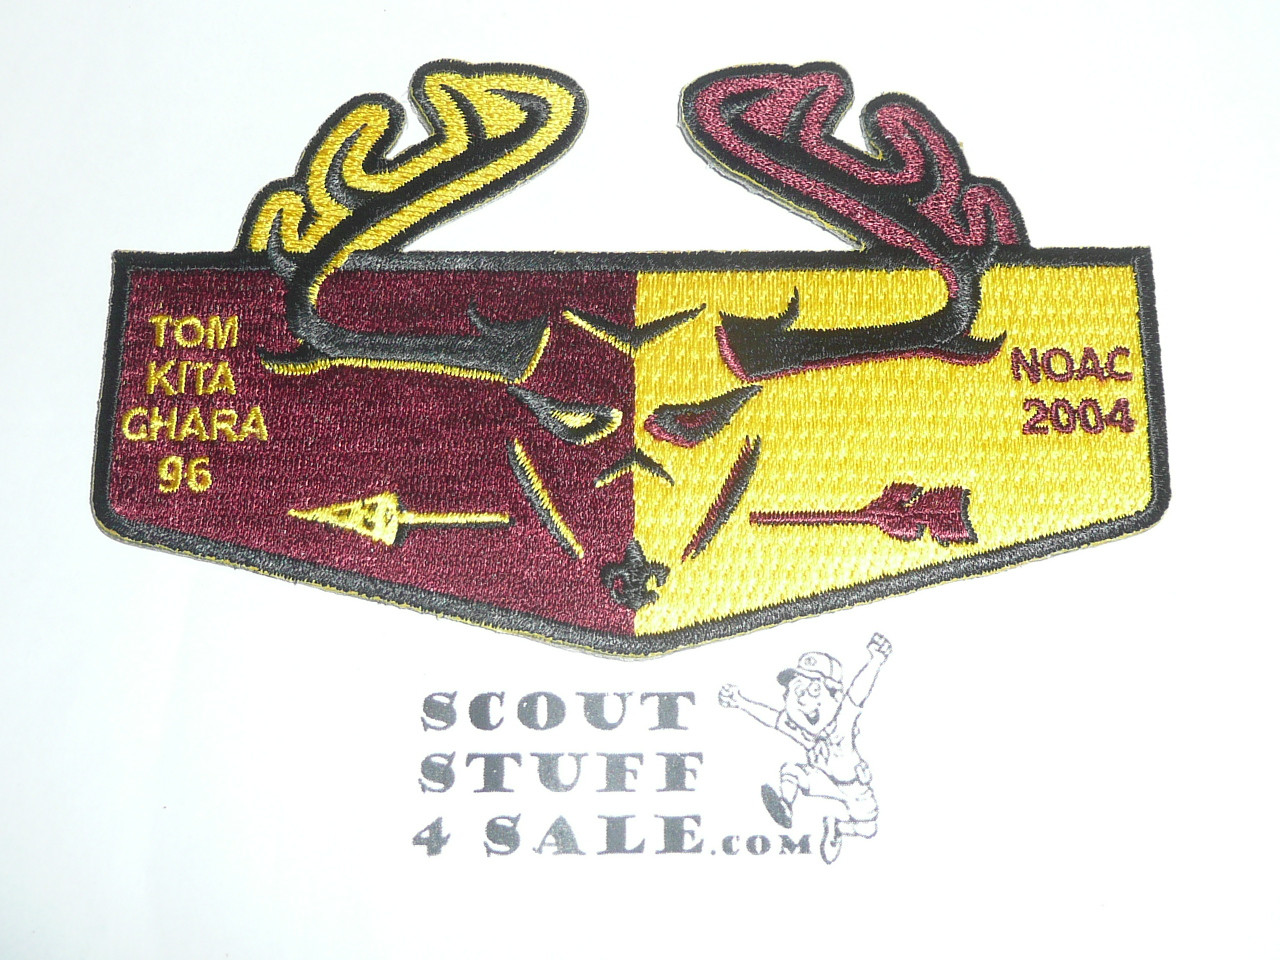 Order of the Arrow Lodge #96 Tom Kita Chara s17 2004 NOAC Flap Patch